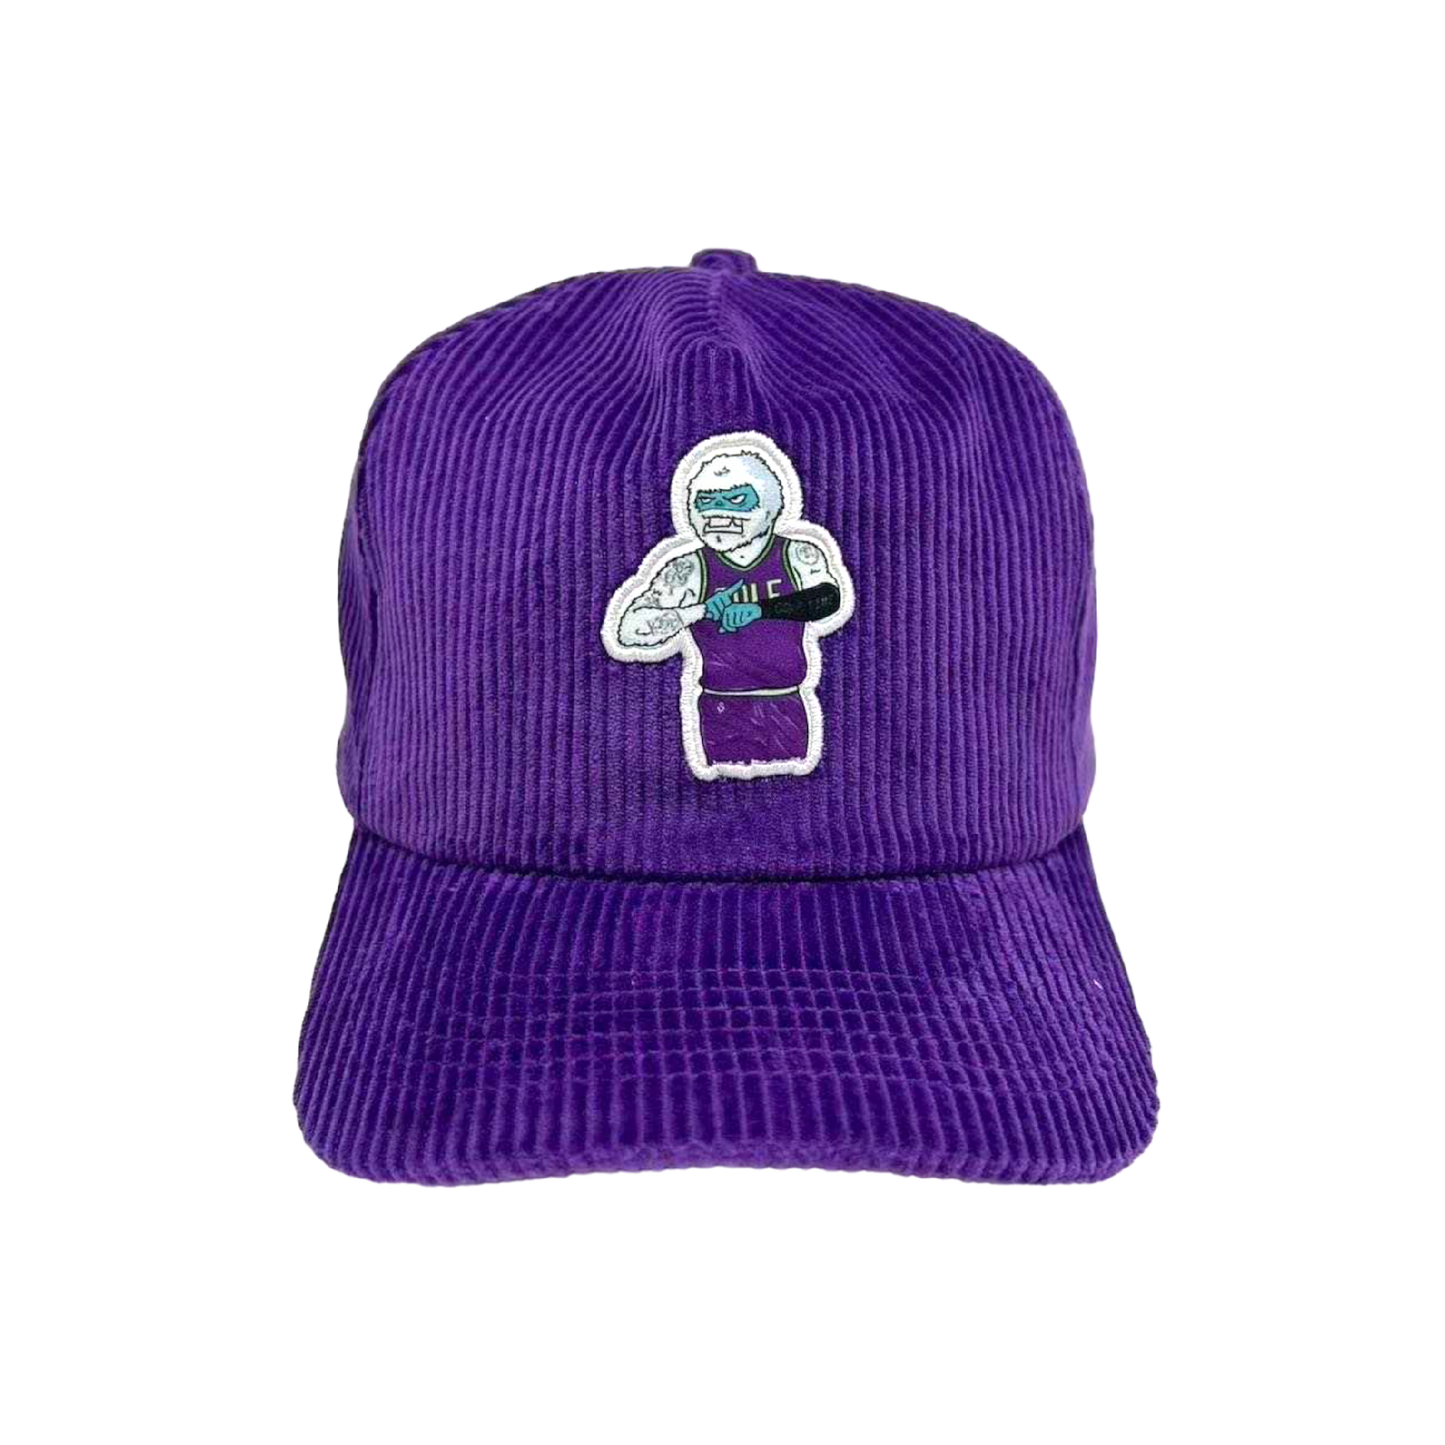 Golf Time Purple Corduroy Hat